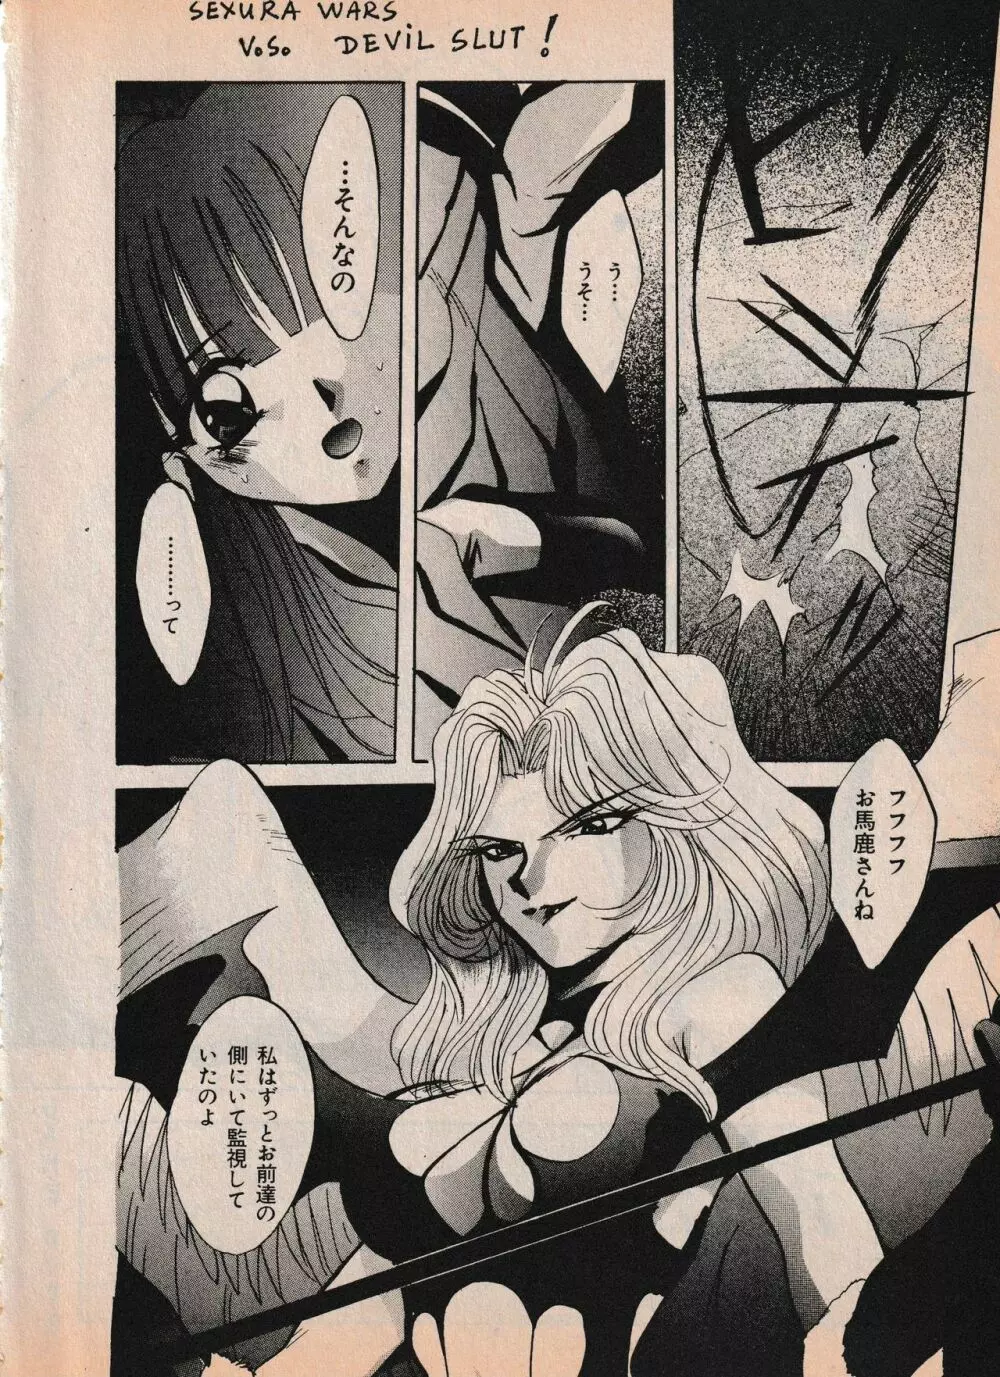 Sailor X vol. 4 - Sailor X vs. Cunty Horny! - page57